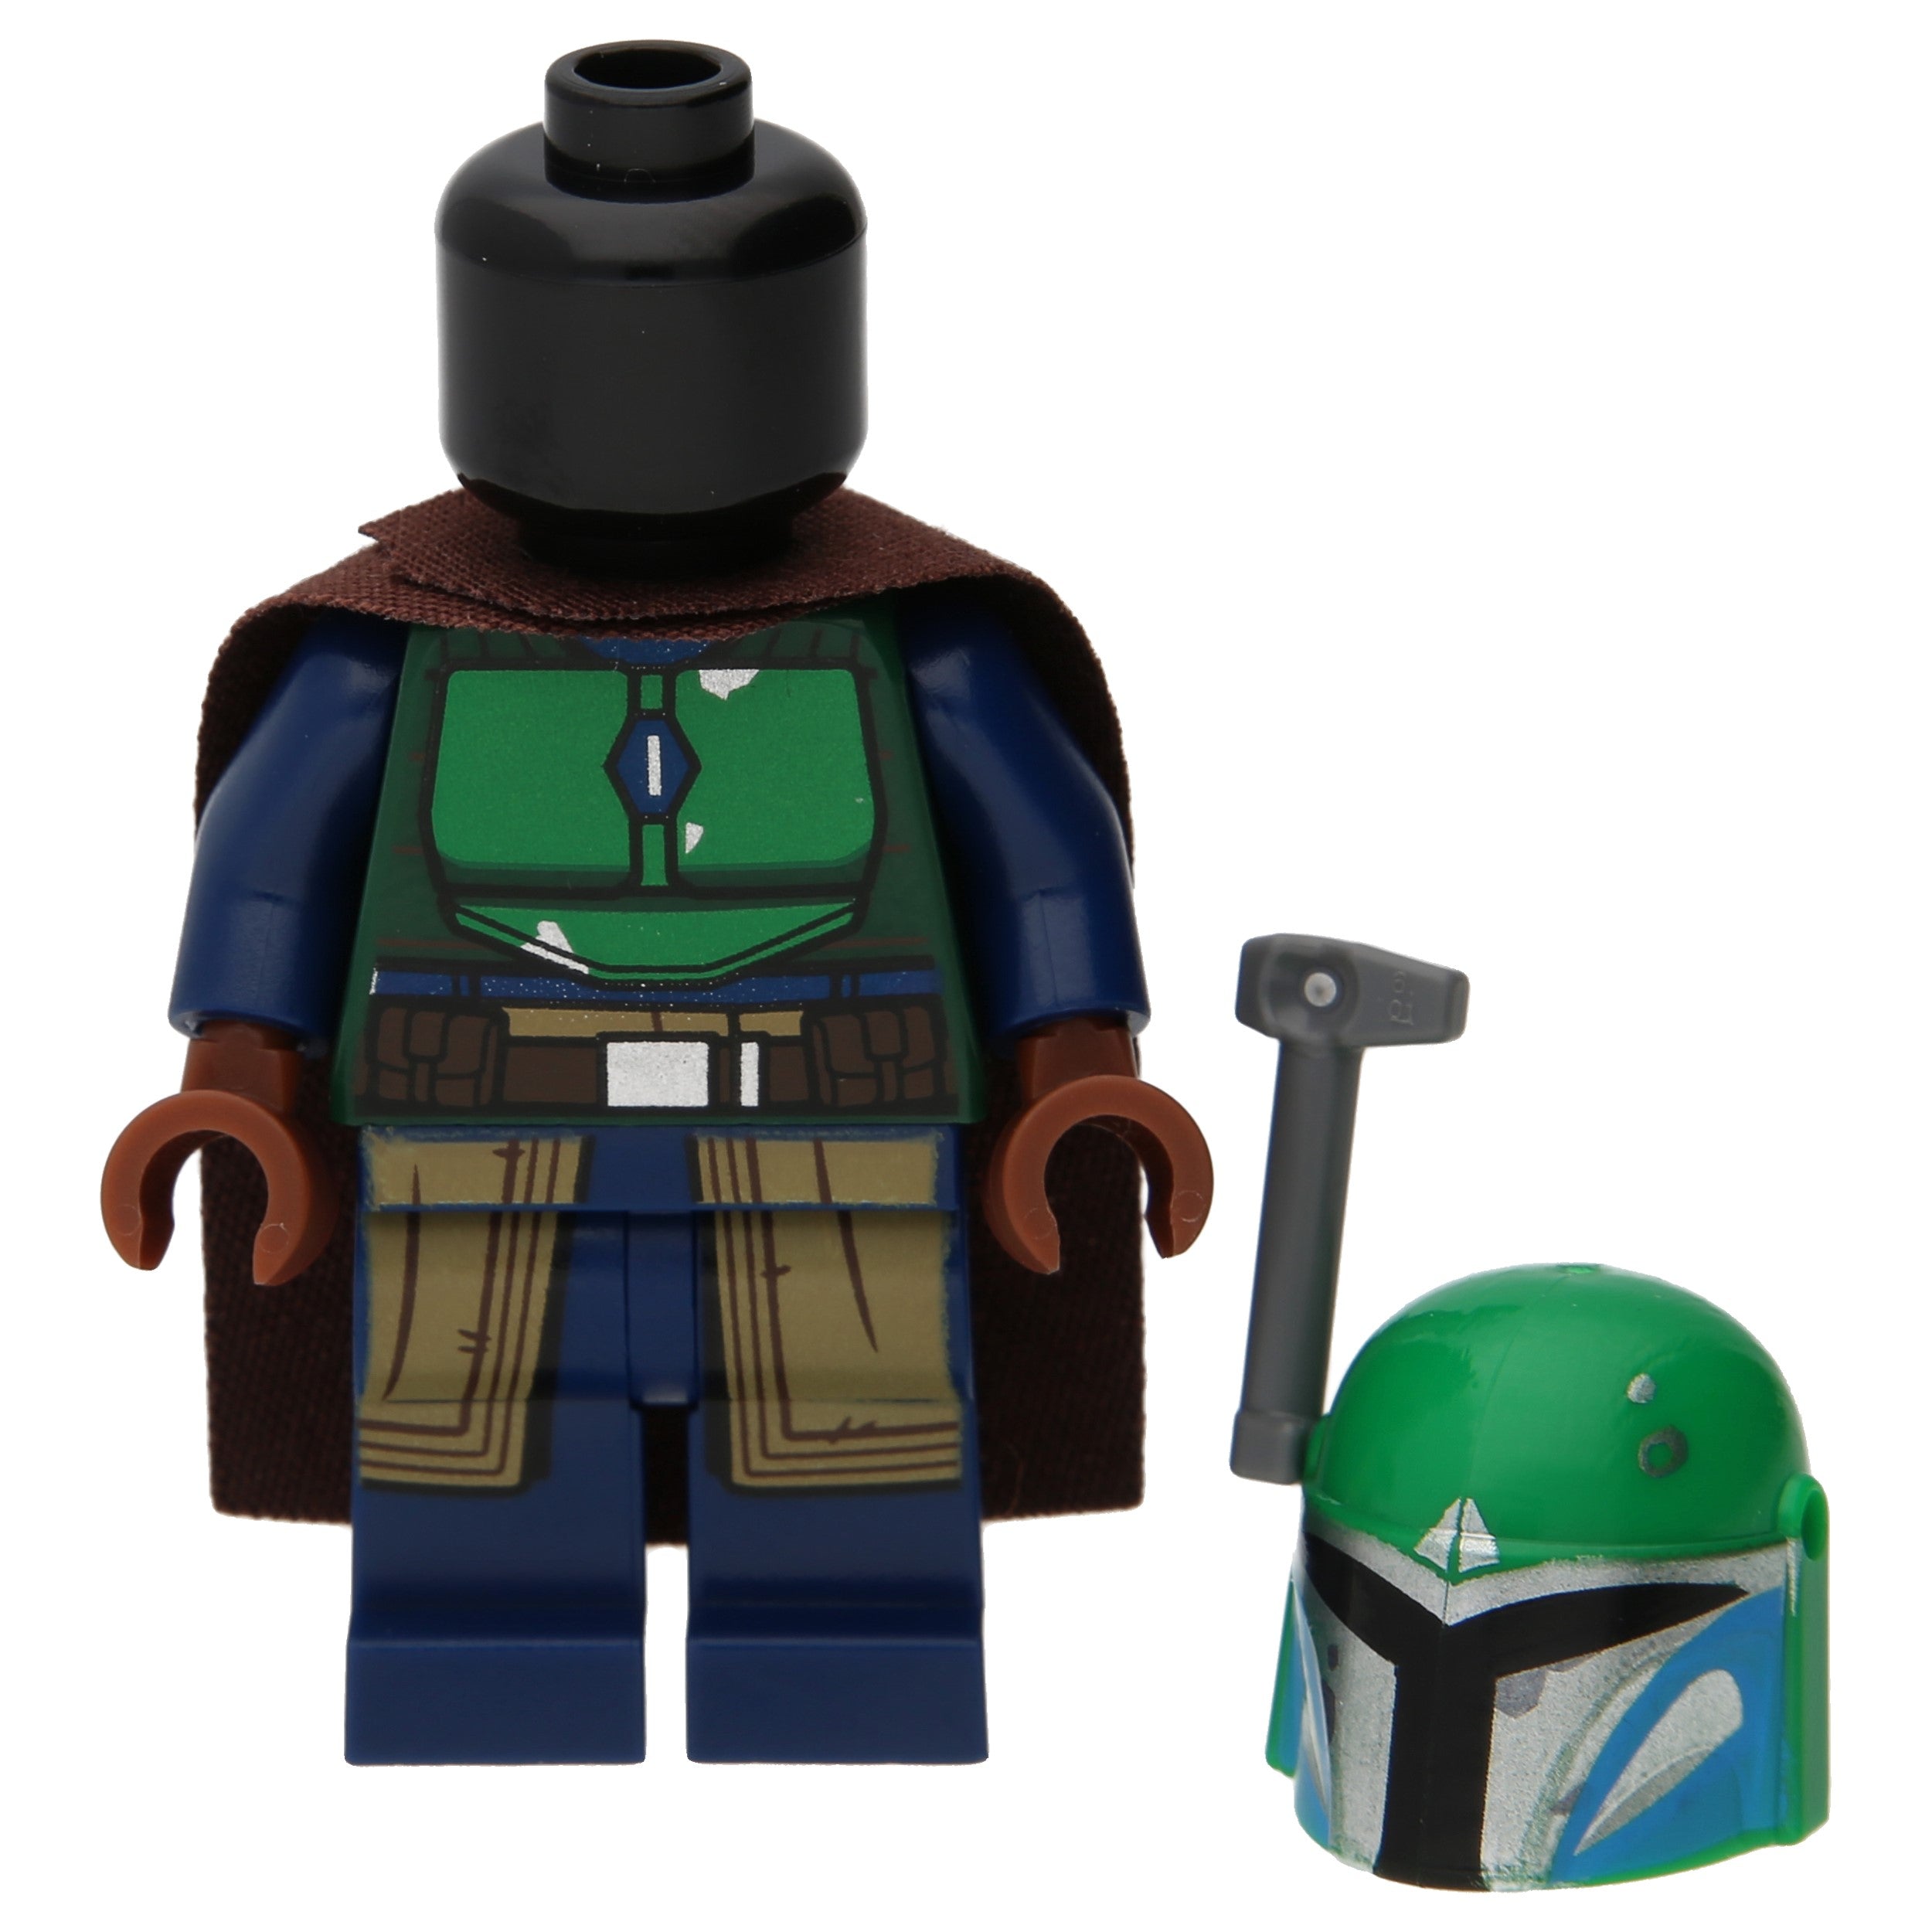 LEGO Star Wars Minifigure - Mandalorian tribal fighter (with antenna)